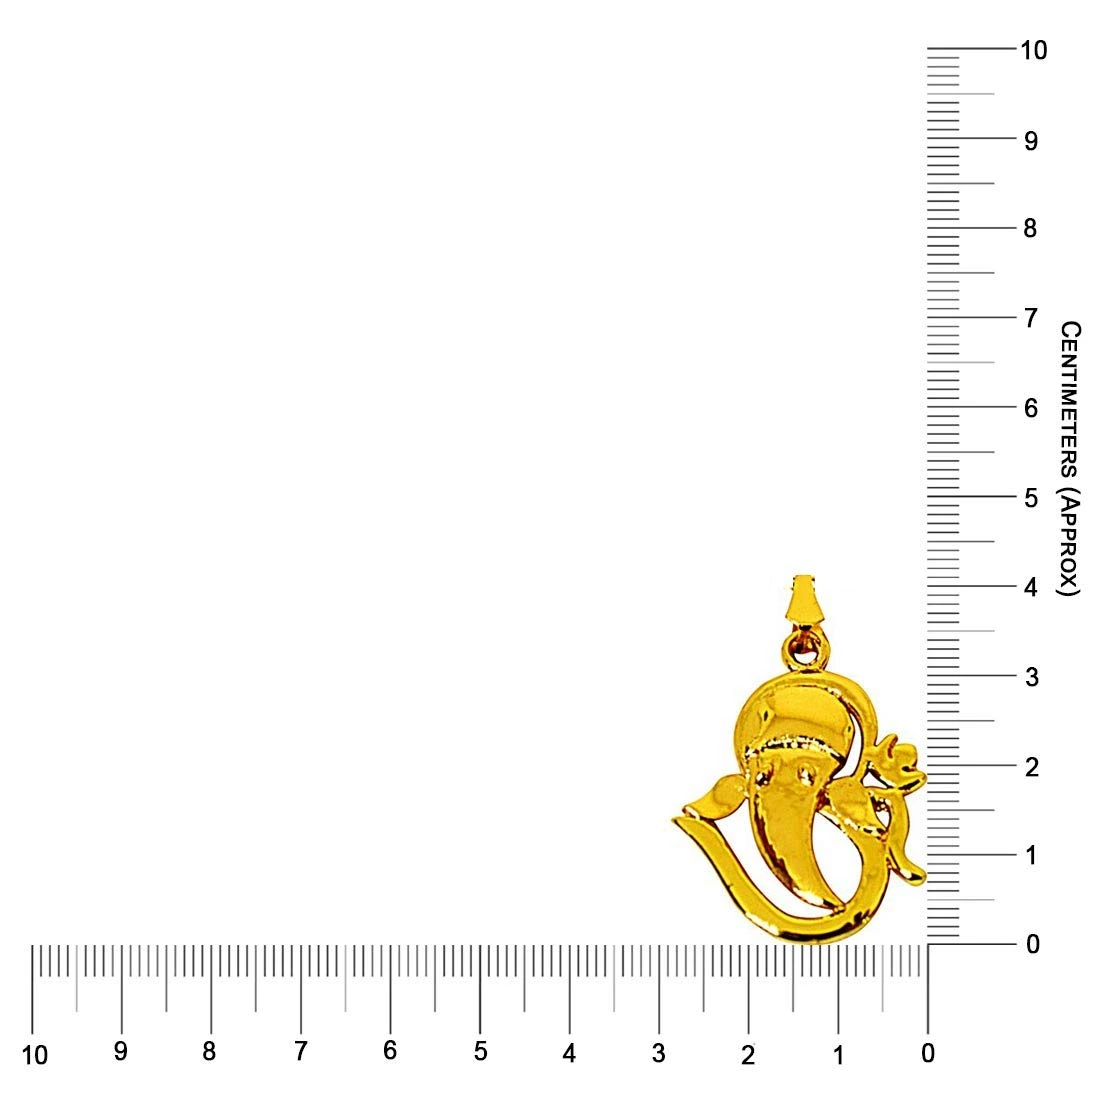 Om Ganeshaya Namah Gold Plated Religious Pendant with Chain SDS269